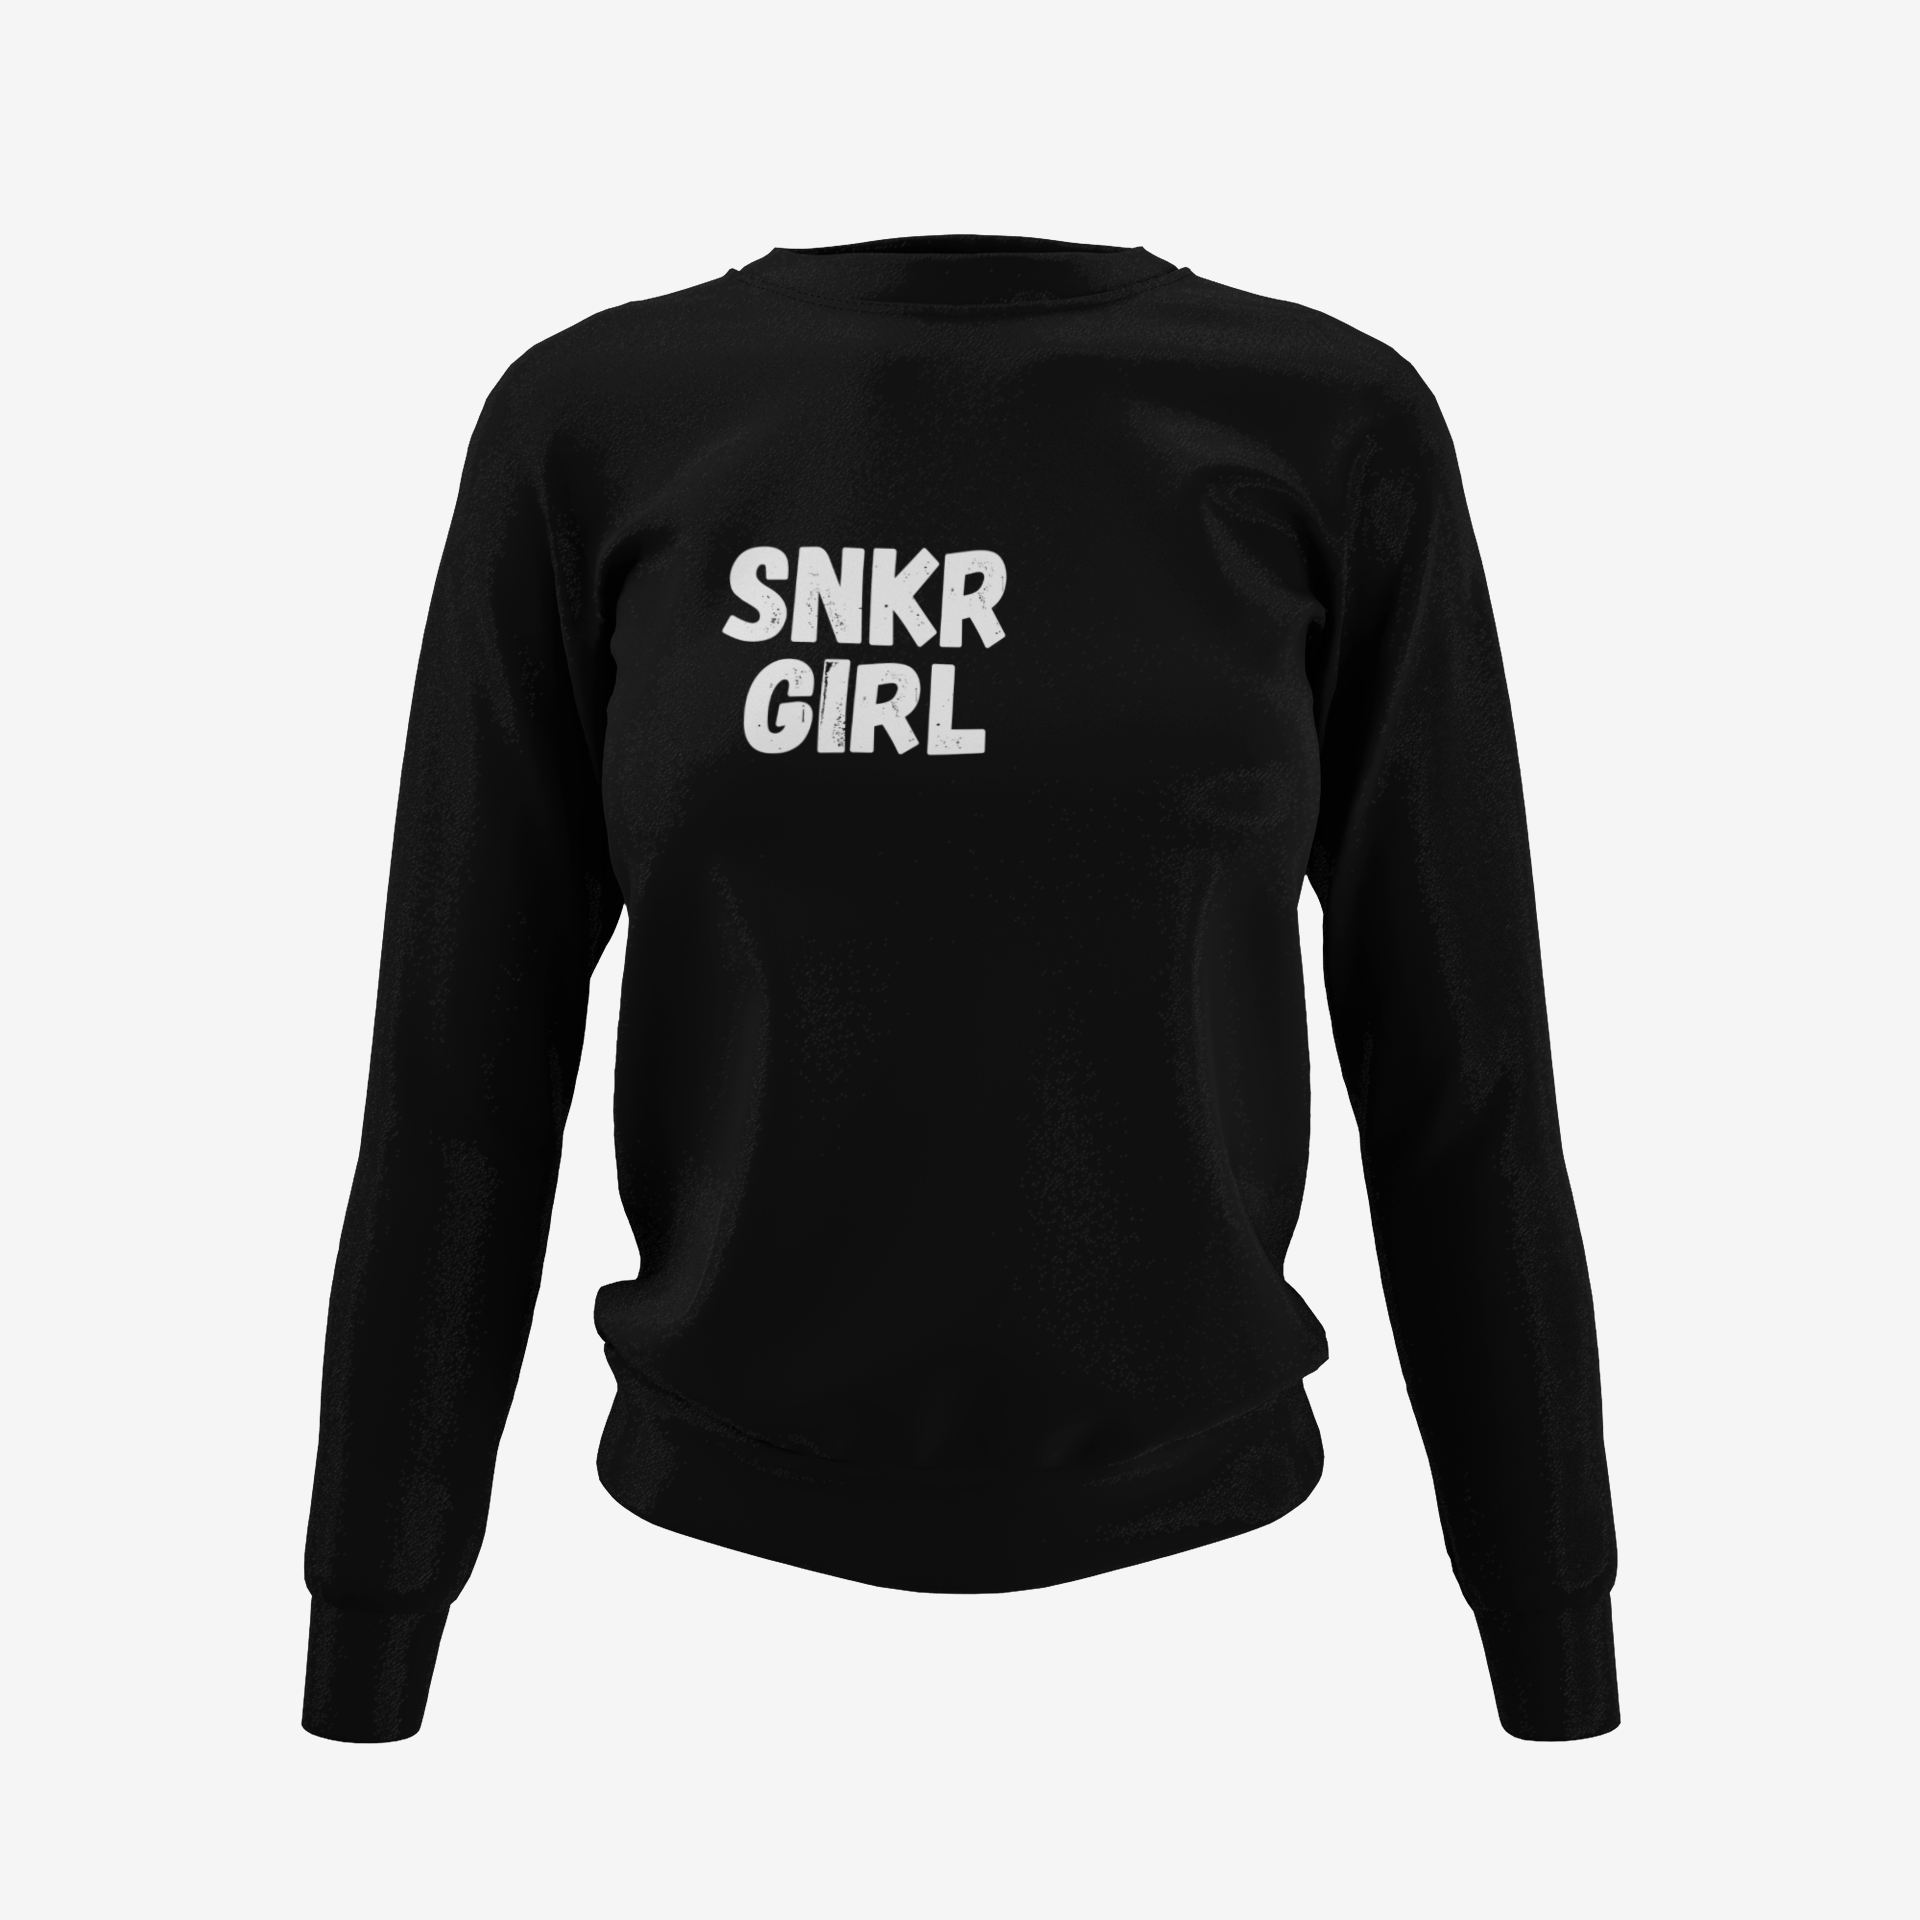 SNKR Girl Sweatshirt